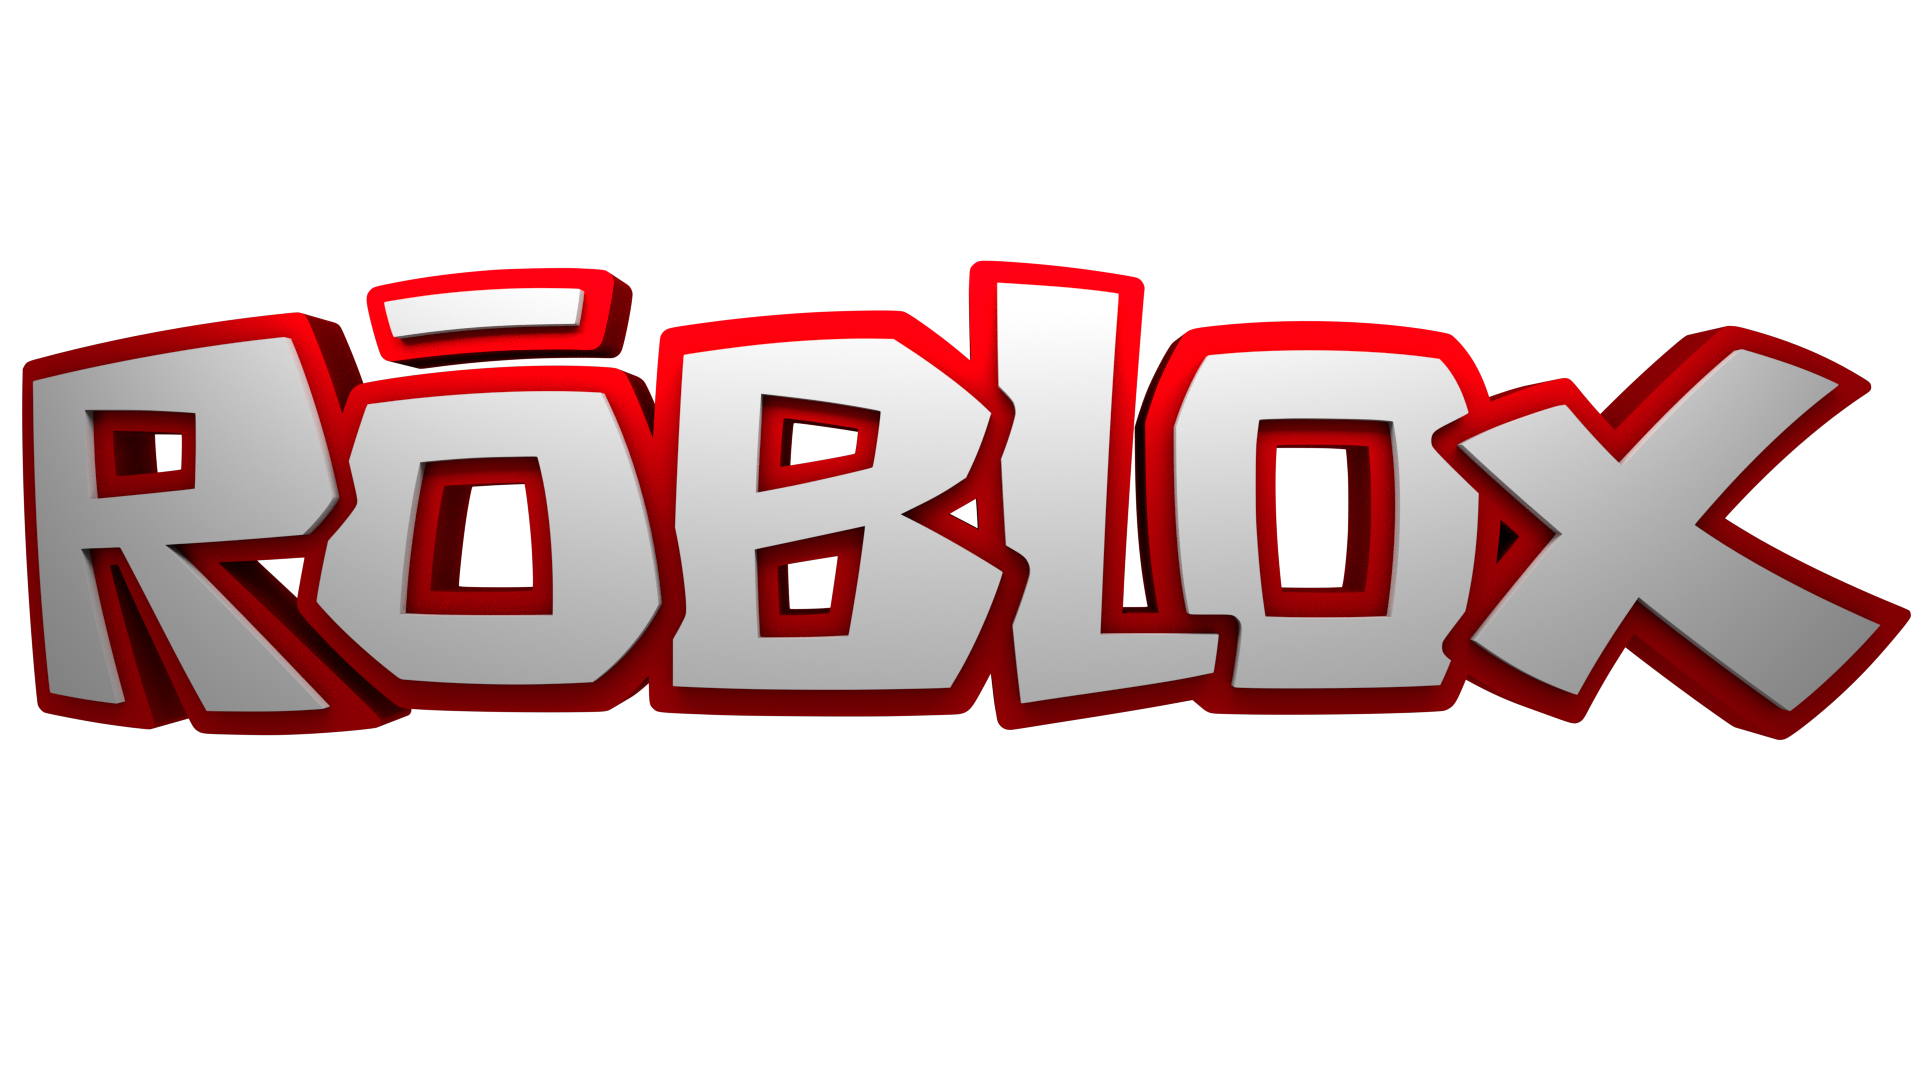 Roblox Games Logo